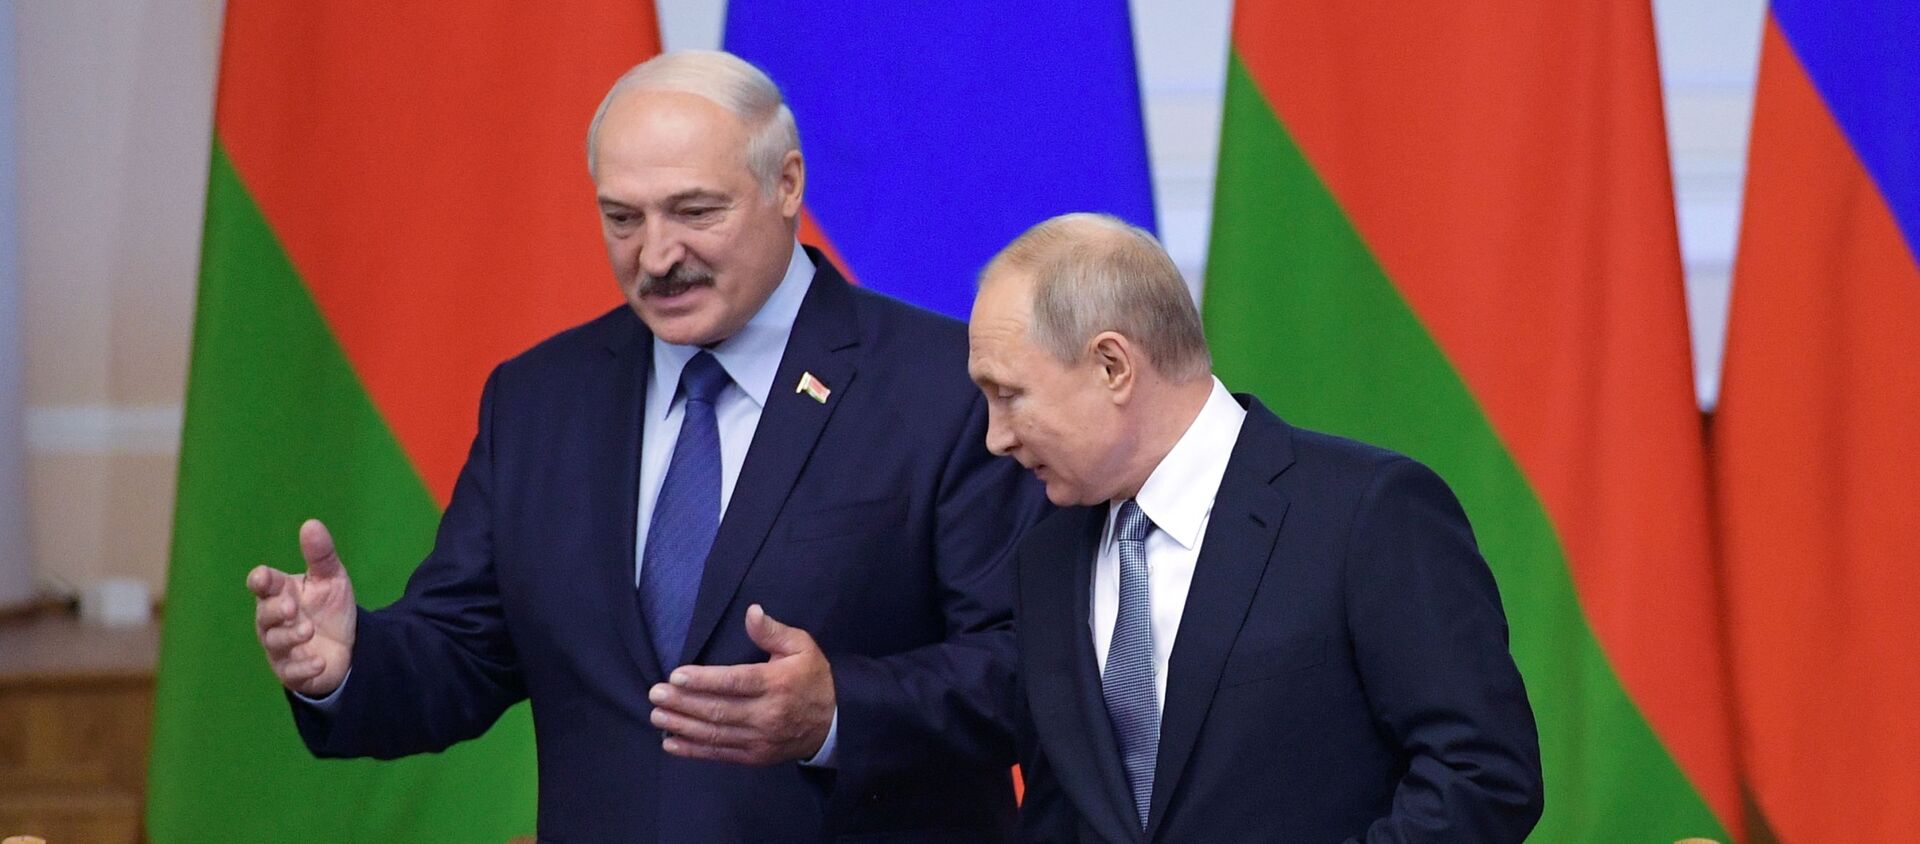  Президент РФ Владимир Путин и президент Белоруссии Александр Лукашенко (слева) - Sputnik Южная Осетия, 1920, 18.09.2019